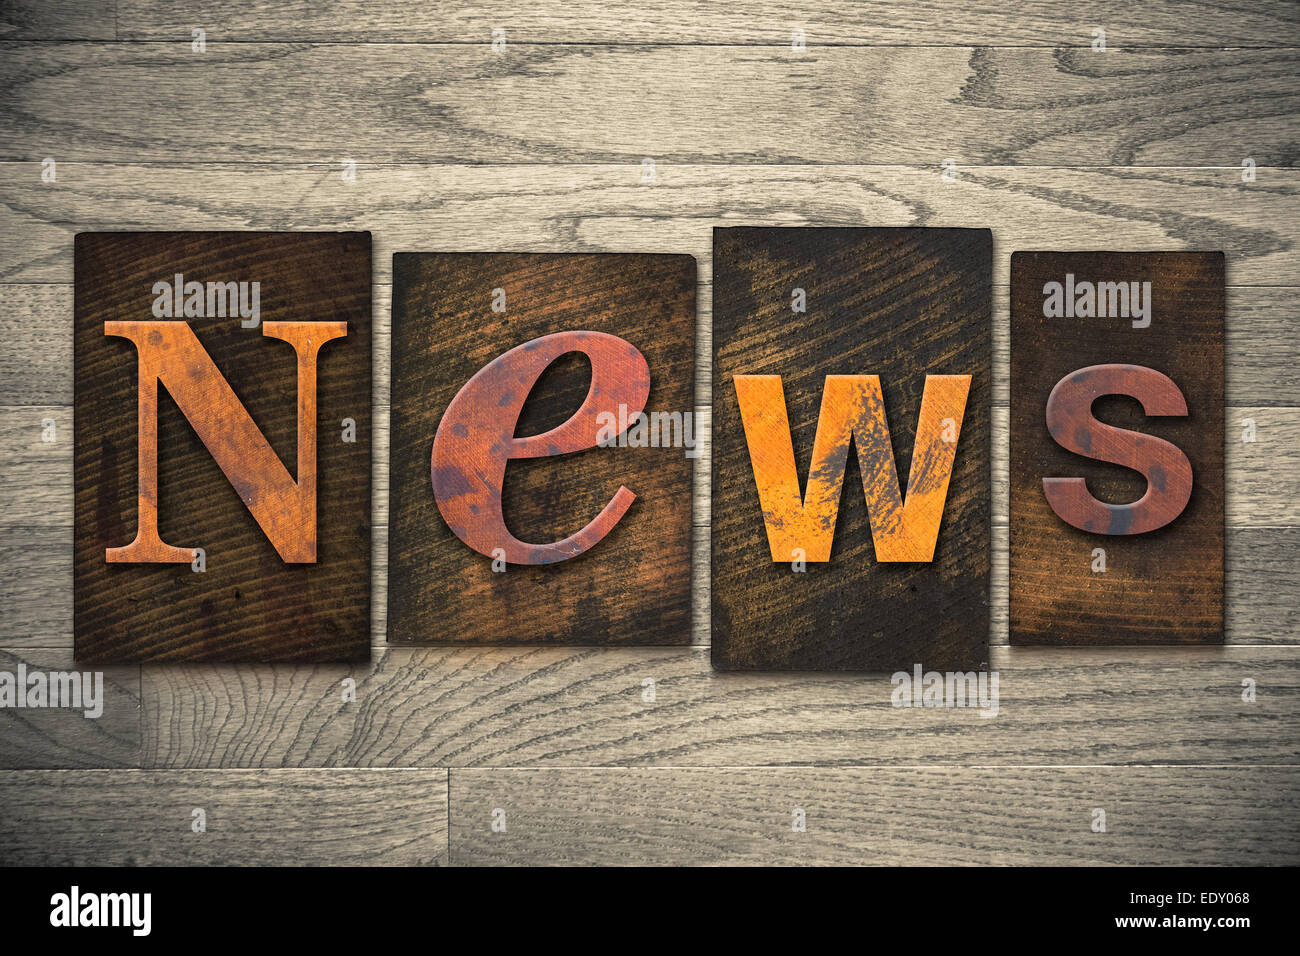 The word 'NEWS' written in wooden letterpress type. Stock Photo